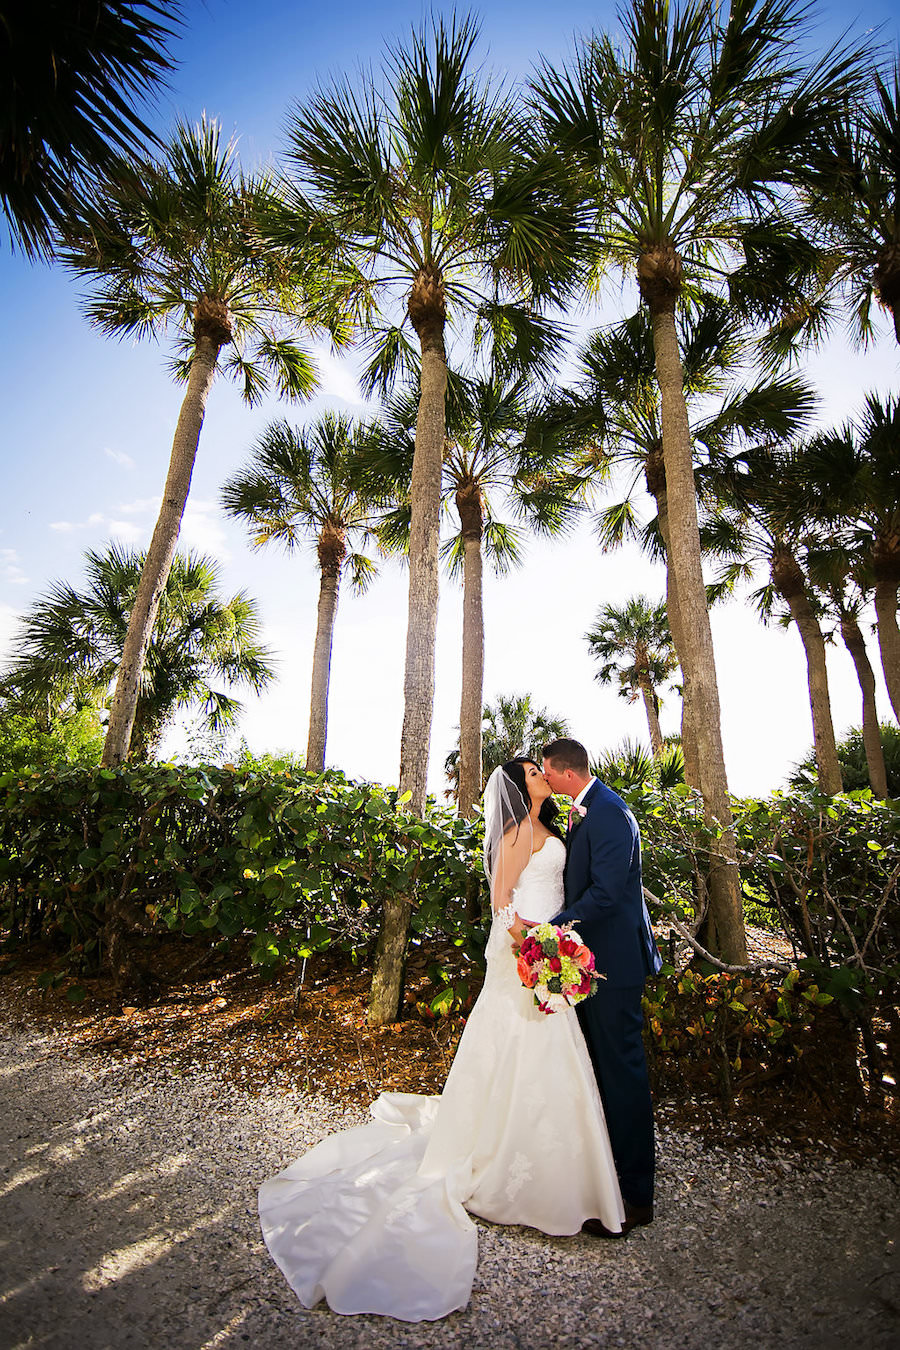 Sarasota Beach Outdoor Bride and Groom Wedding Day Portrait | Sarasota Wedding Photographer Limelight Photography